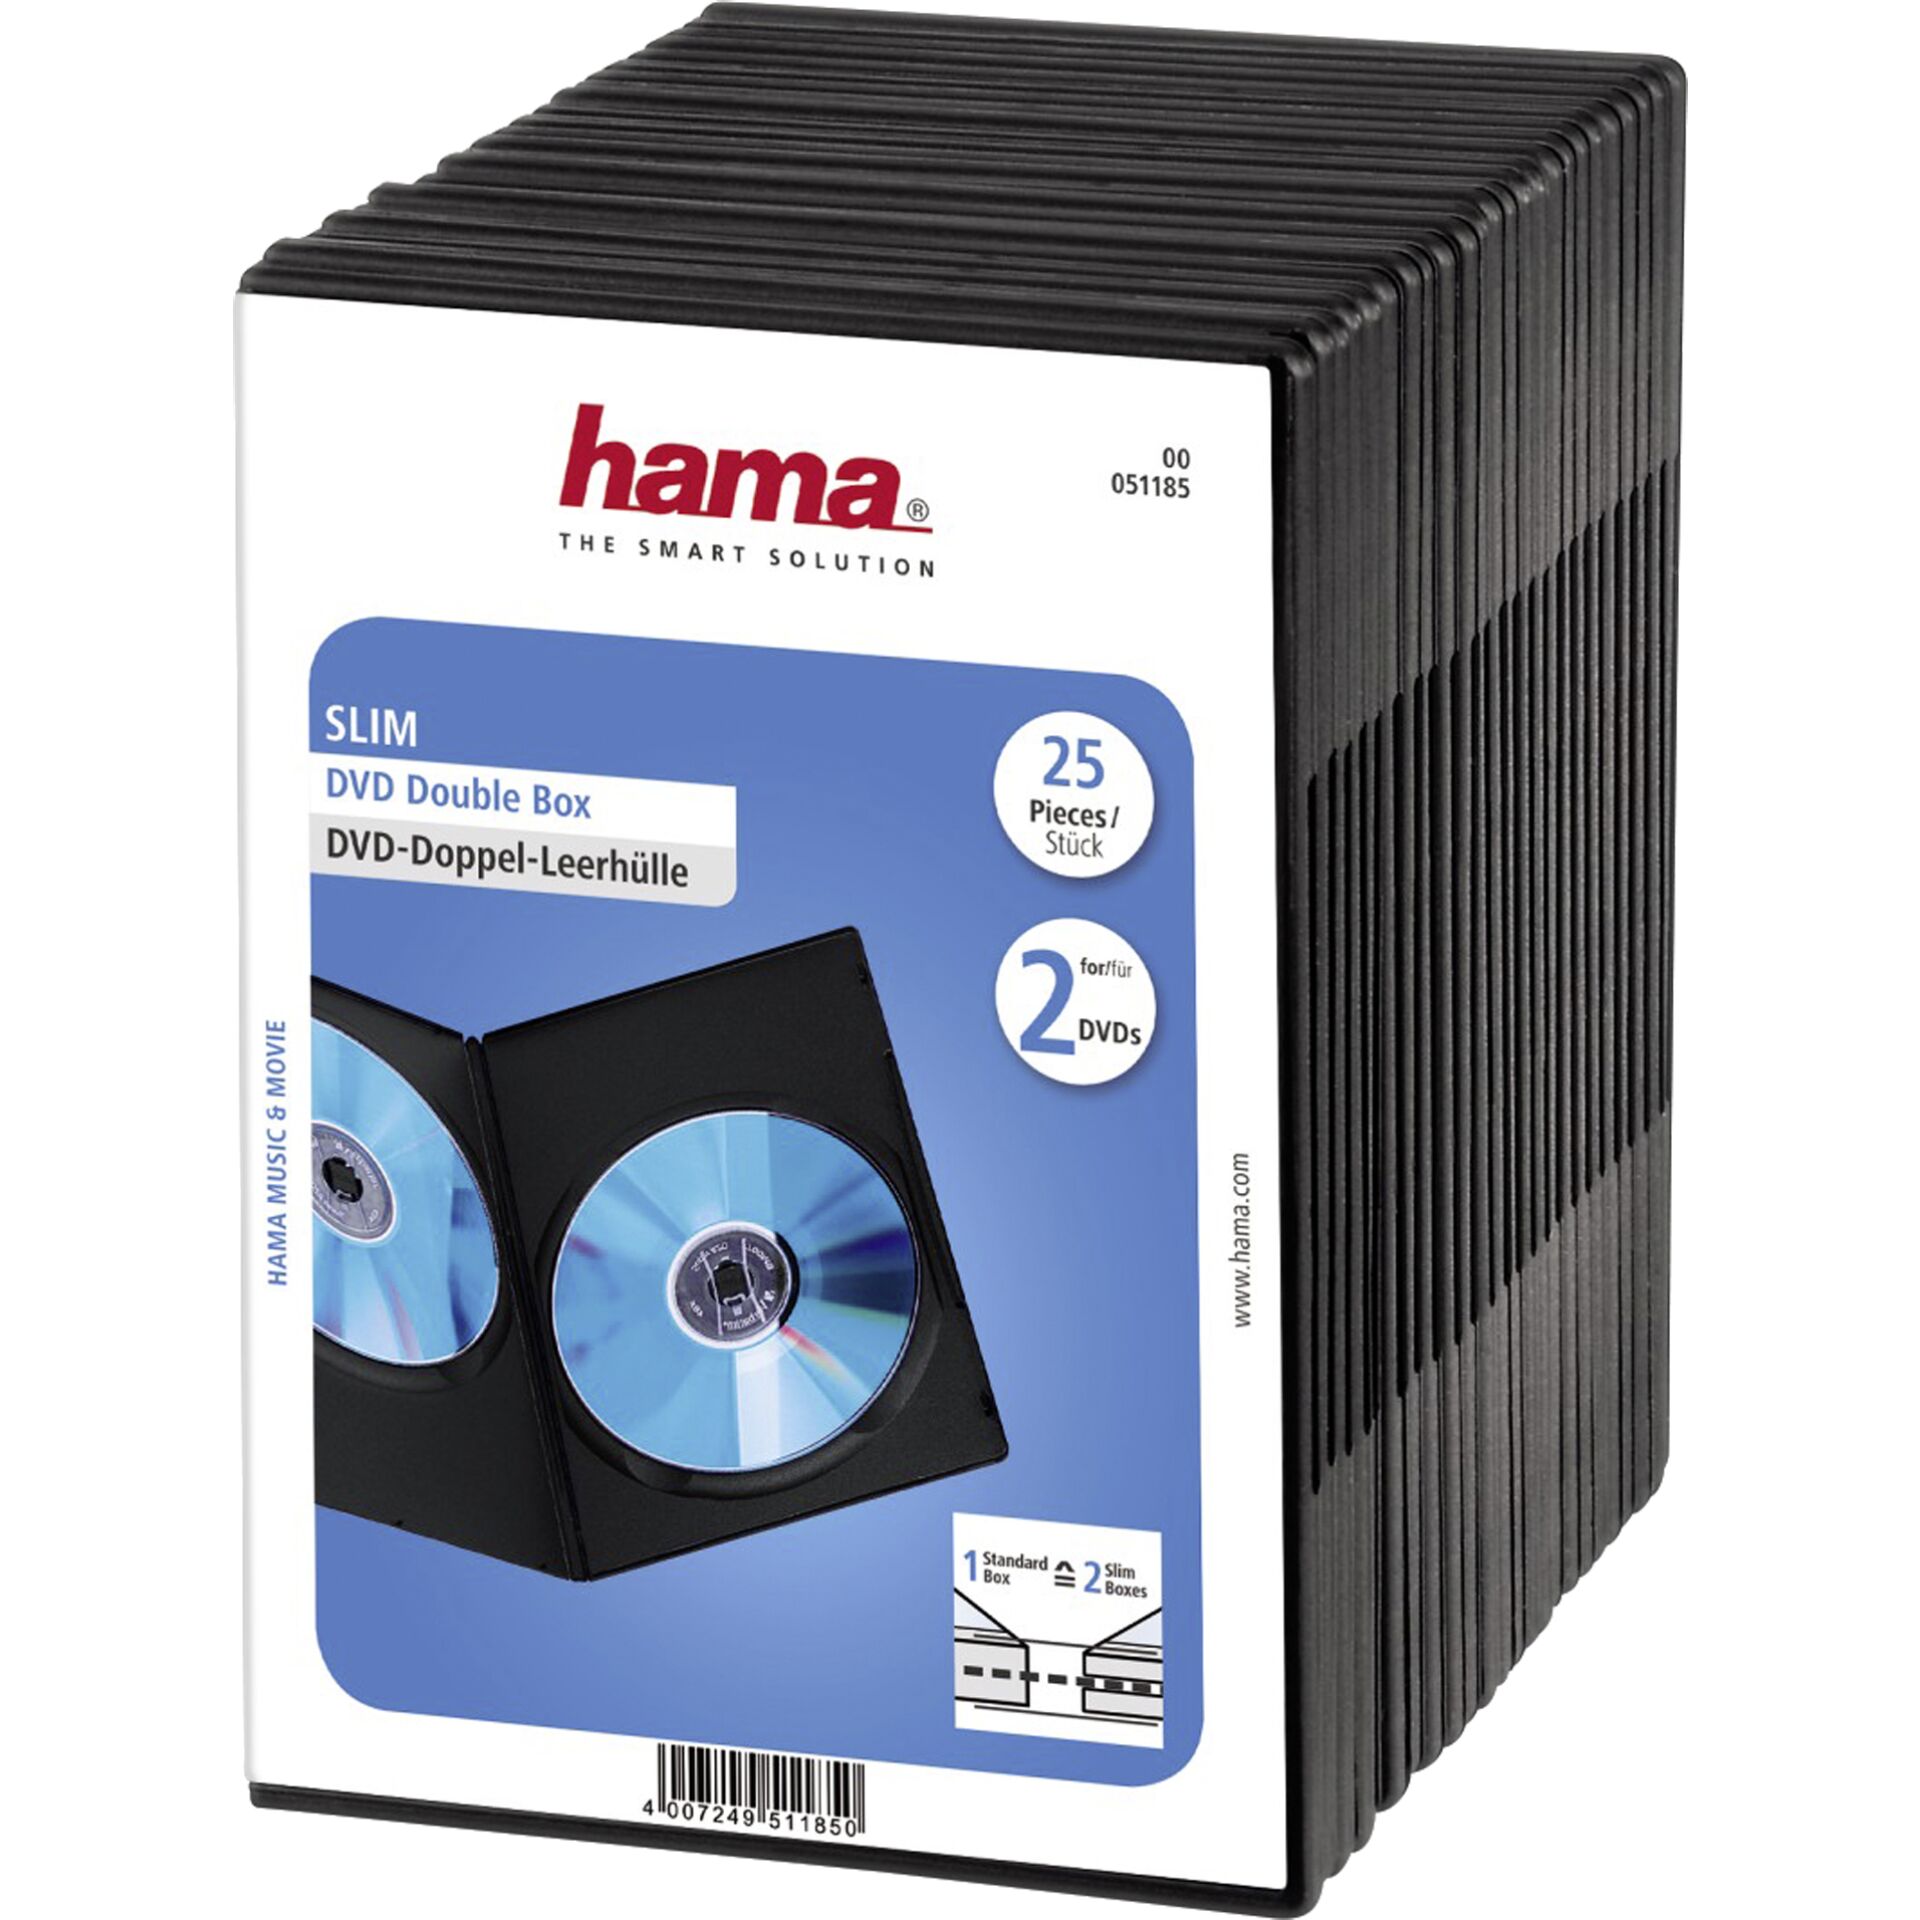 1x25 Hama DVD-Doppel-Leerhülle Slim  75% Platzsparnis     51185